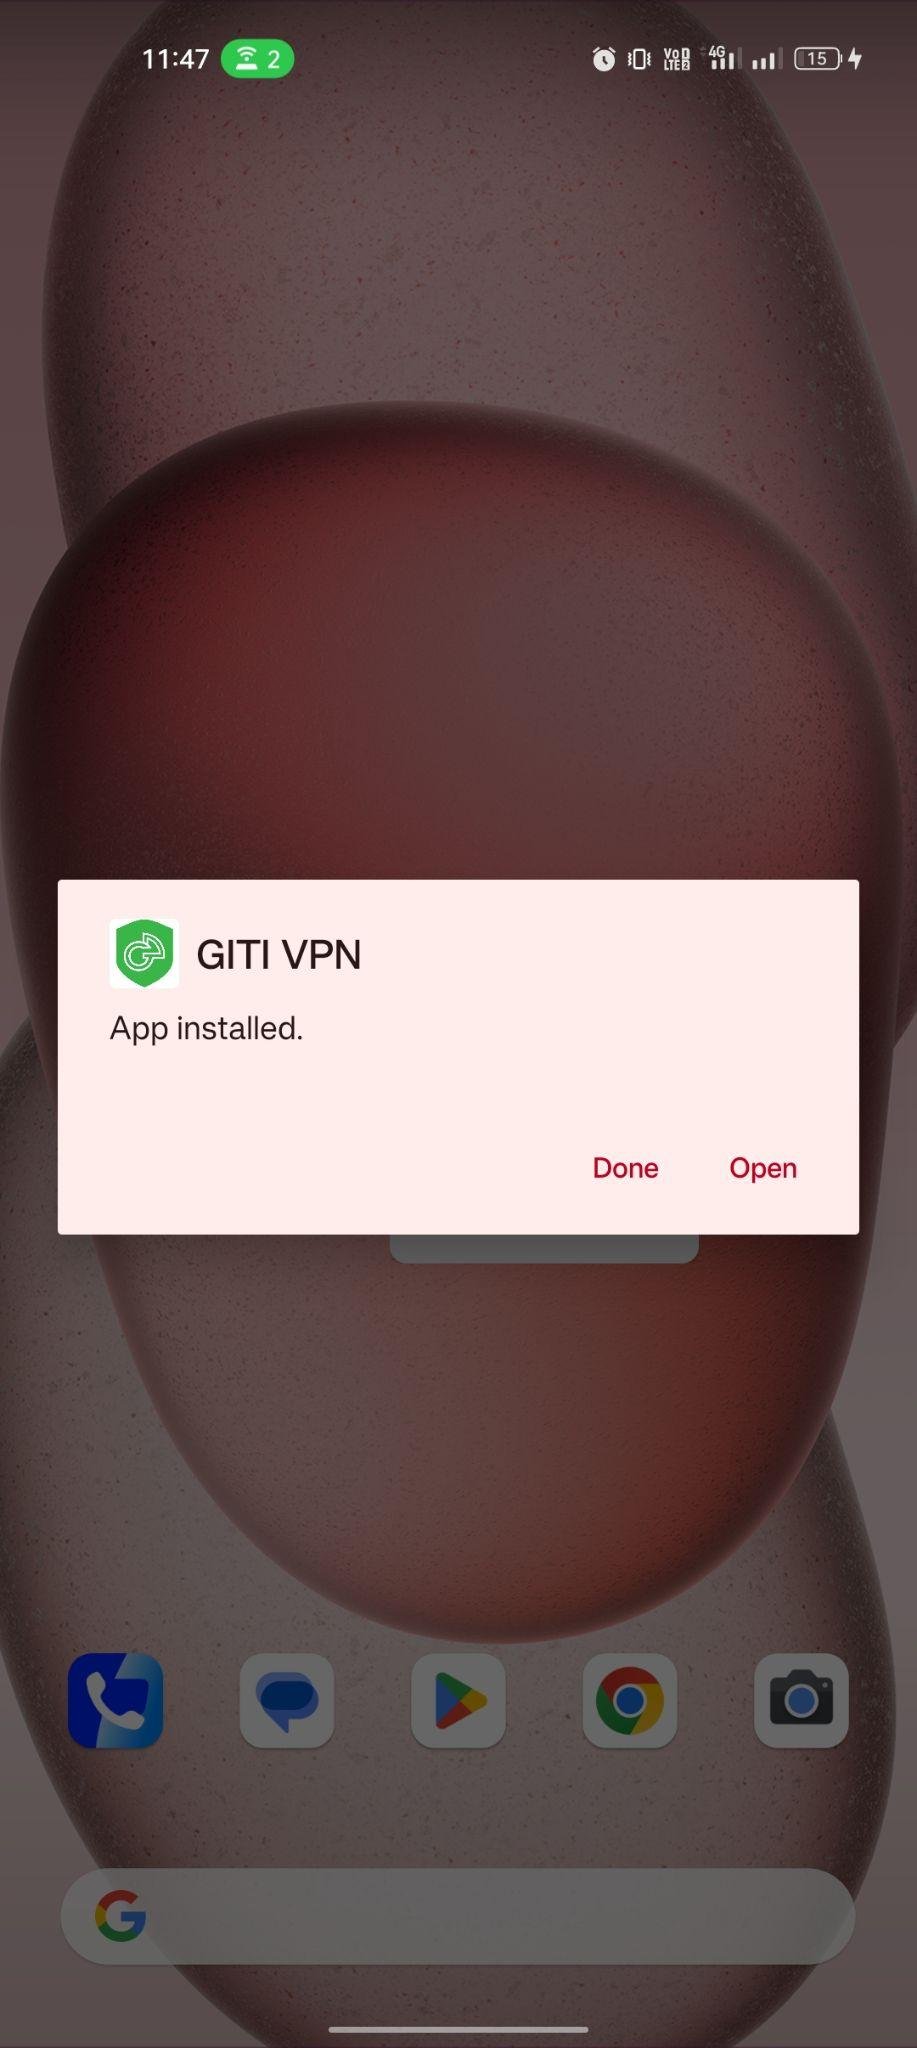 Giti VPN apk installed